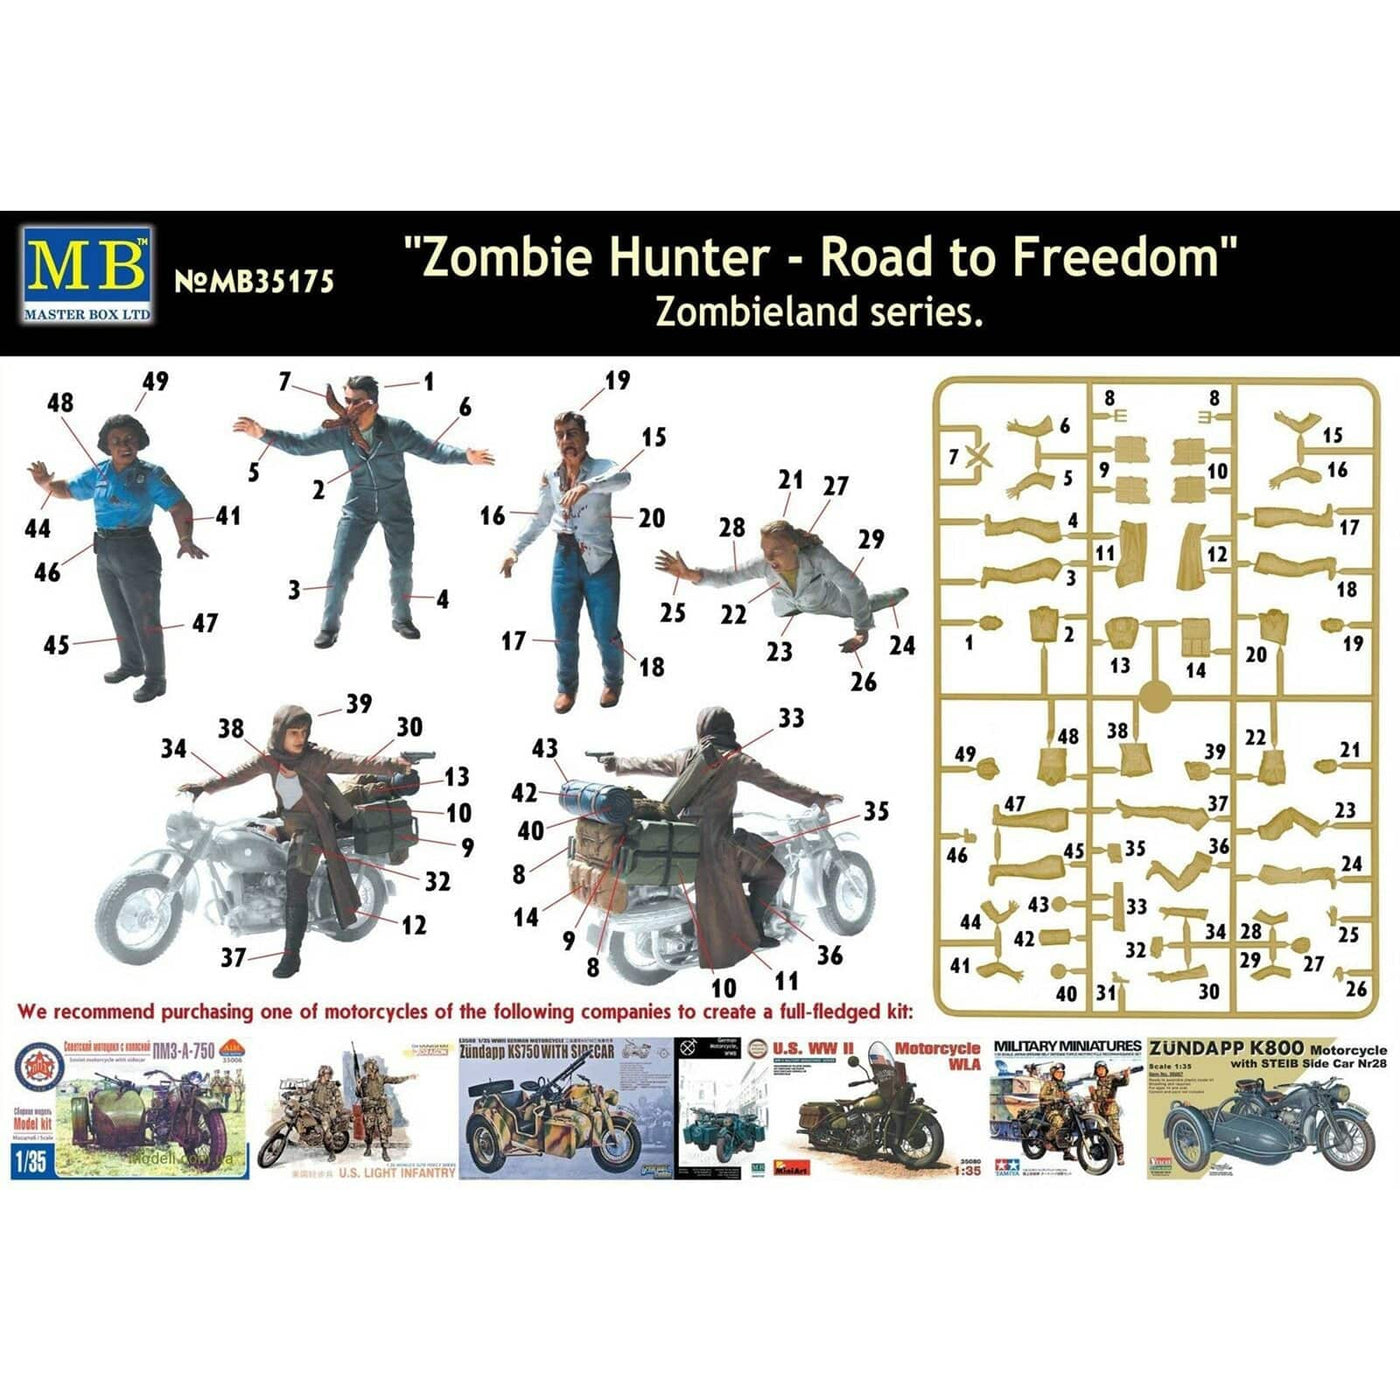 Master Box - Master Box 35175 1/35 Zombie Hunter - Road to Freedom, Zombieland series Plastic Model Kit